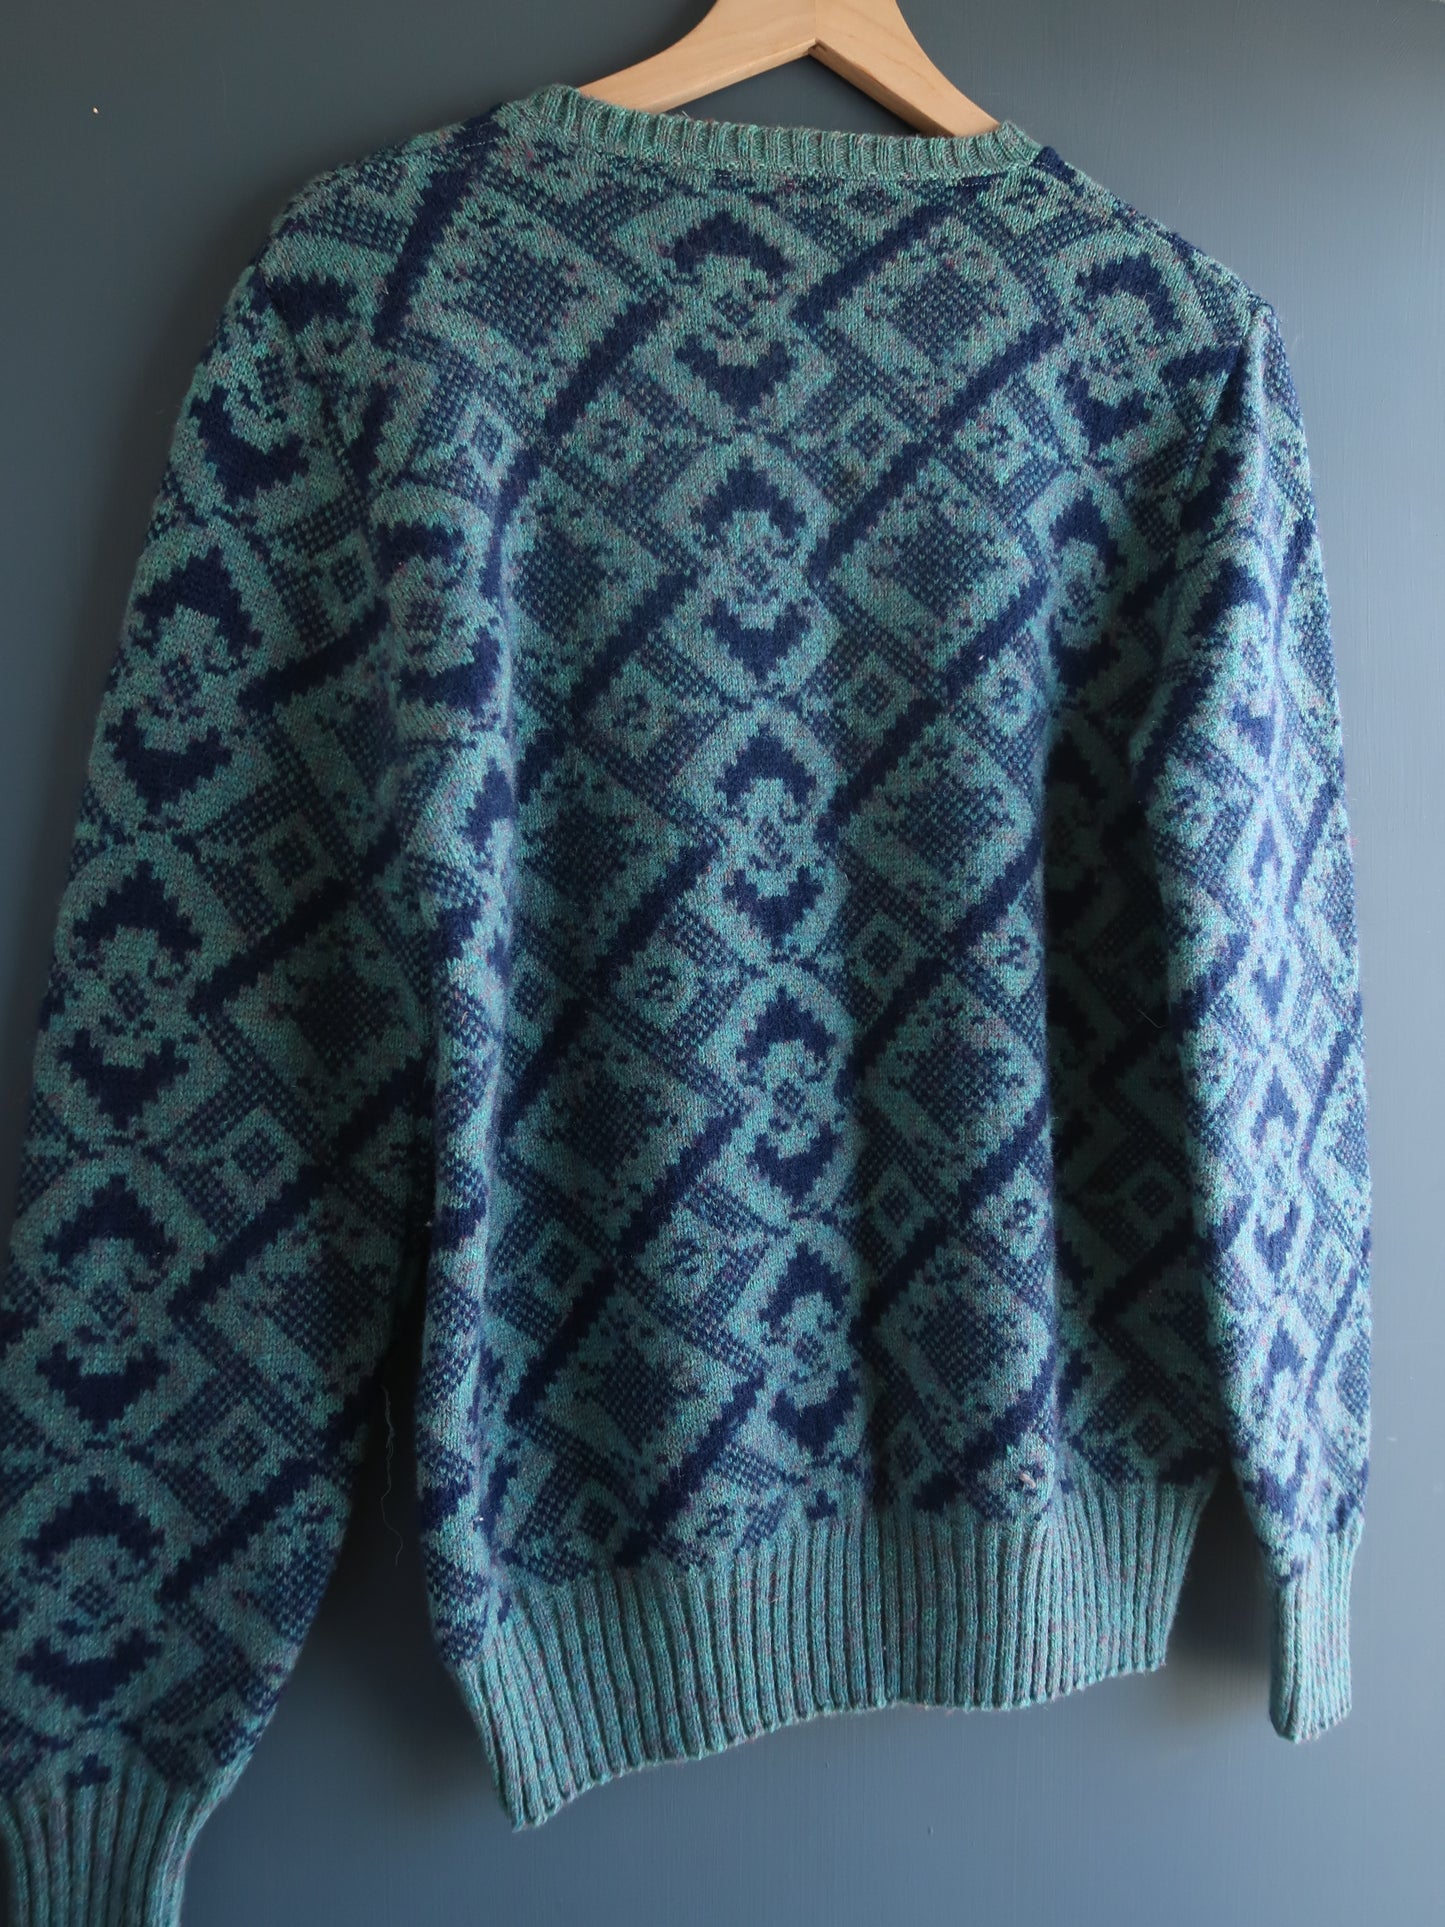 1980s Shetland Wool Sweater Size M